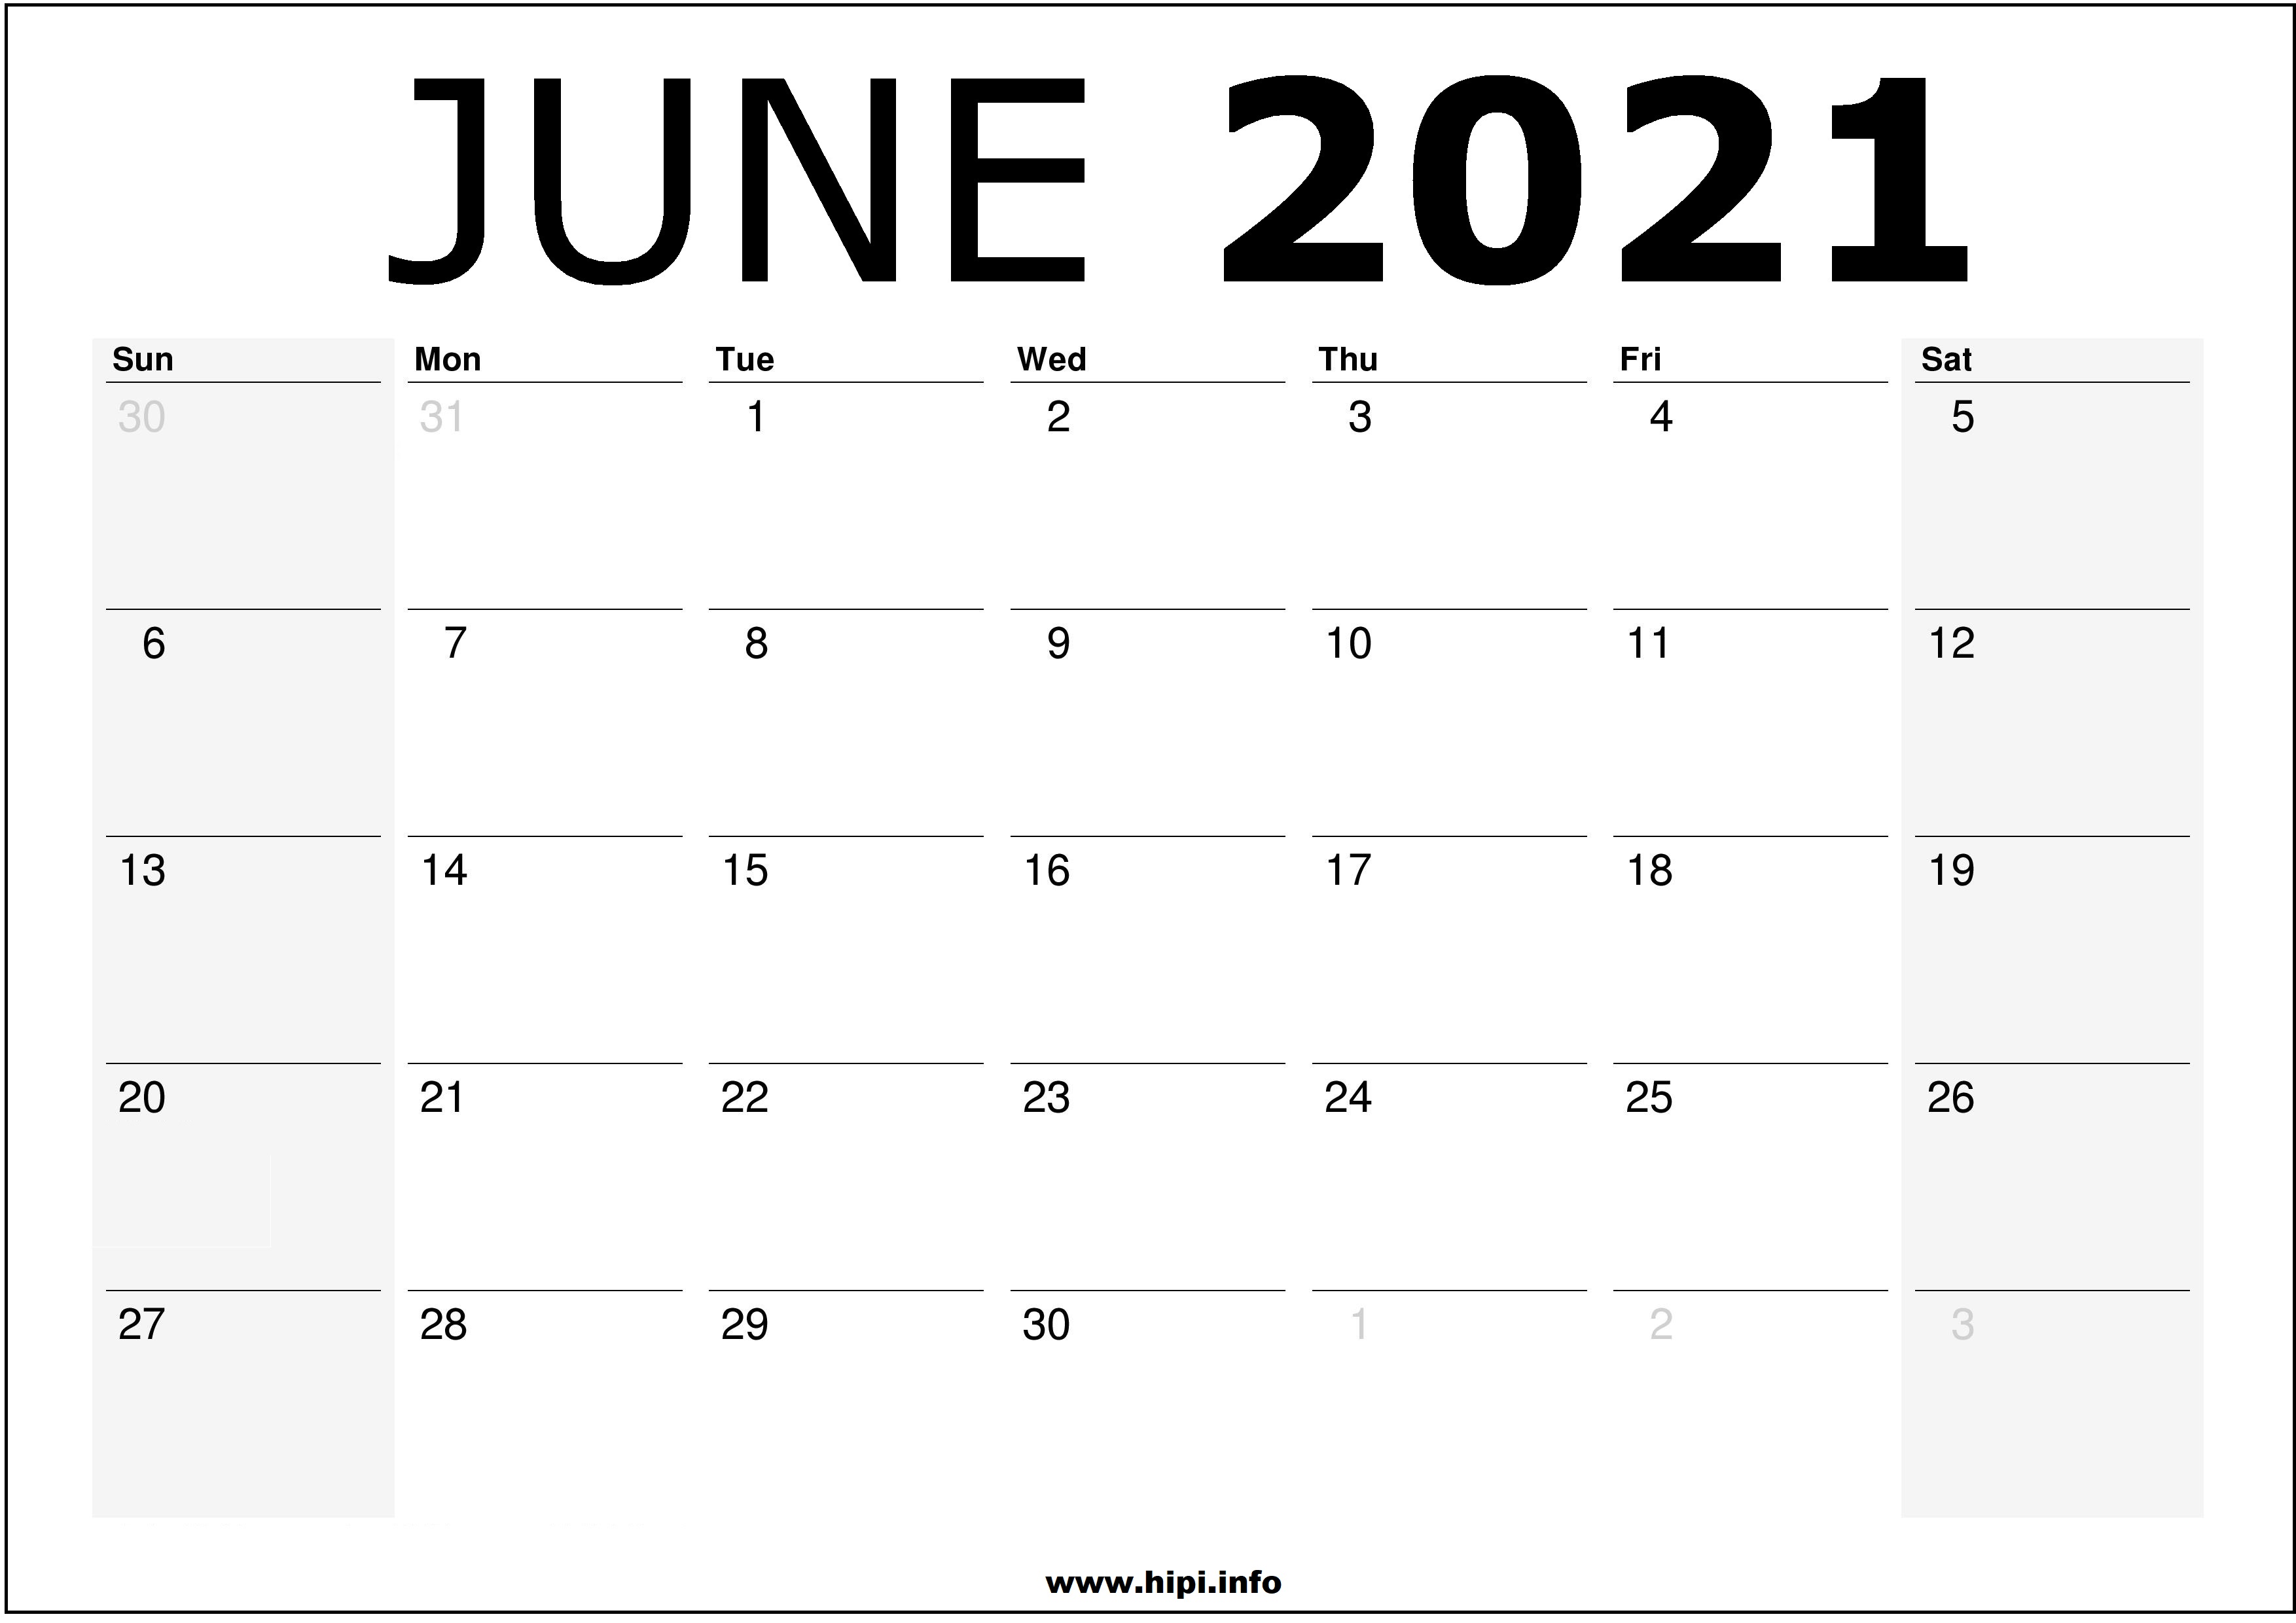 June 2021 Calendar Printable - Monthly Calendar Free ...